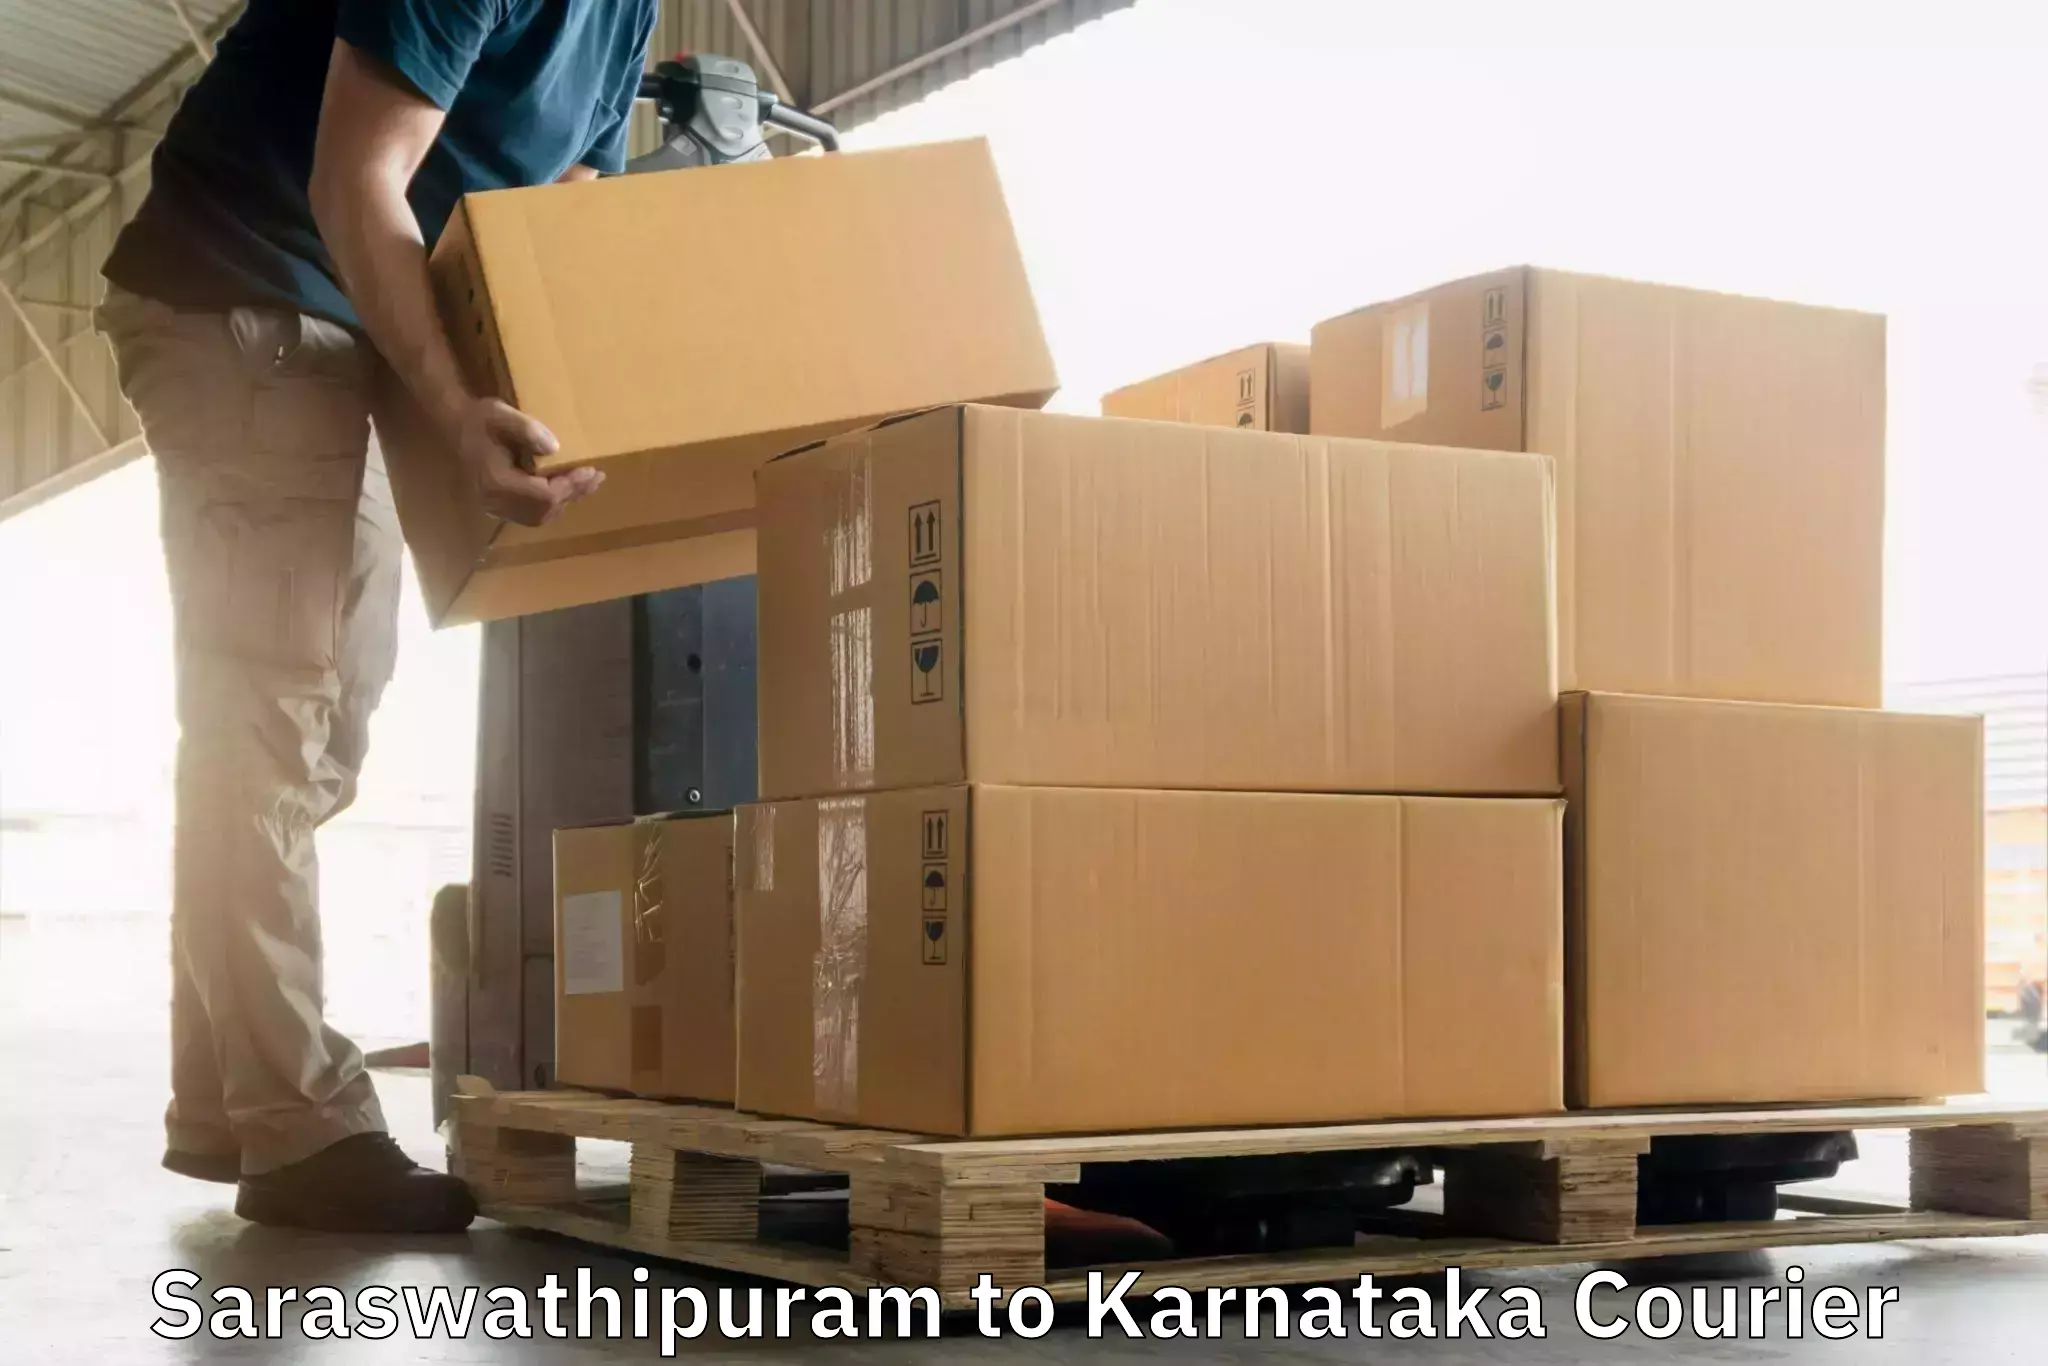 High-capacity parcel service Saraswathipuram to Rona Gadag